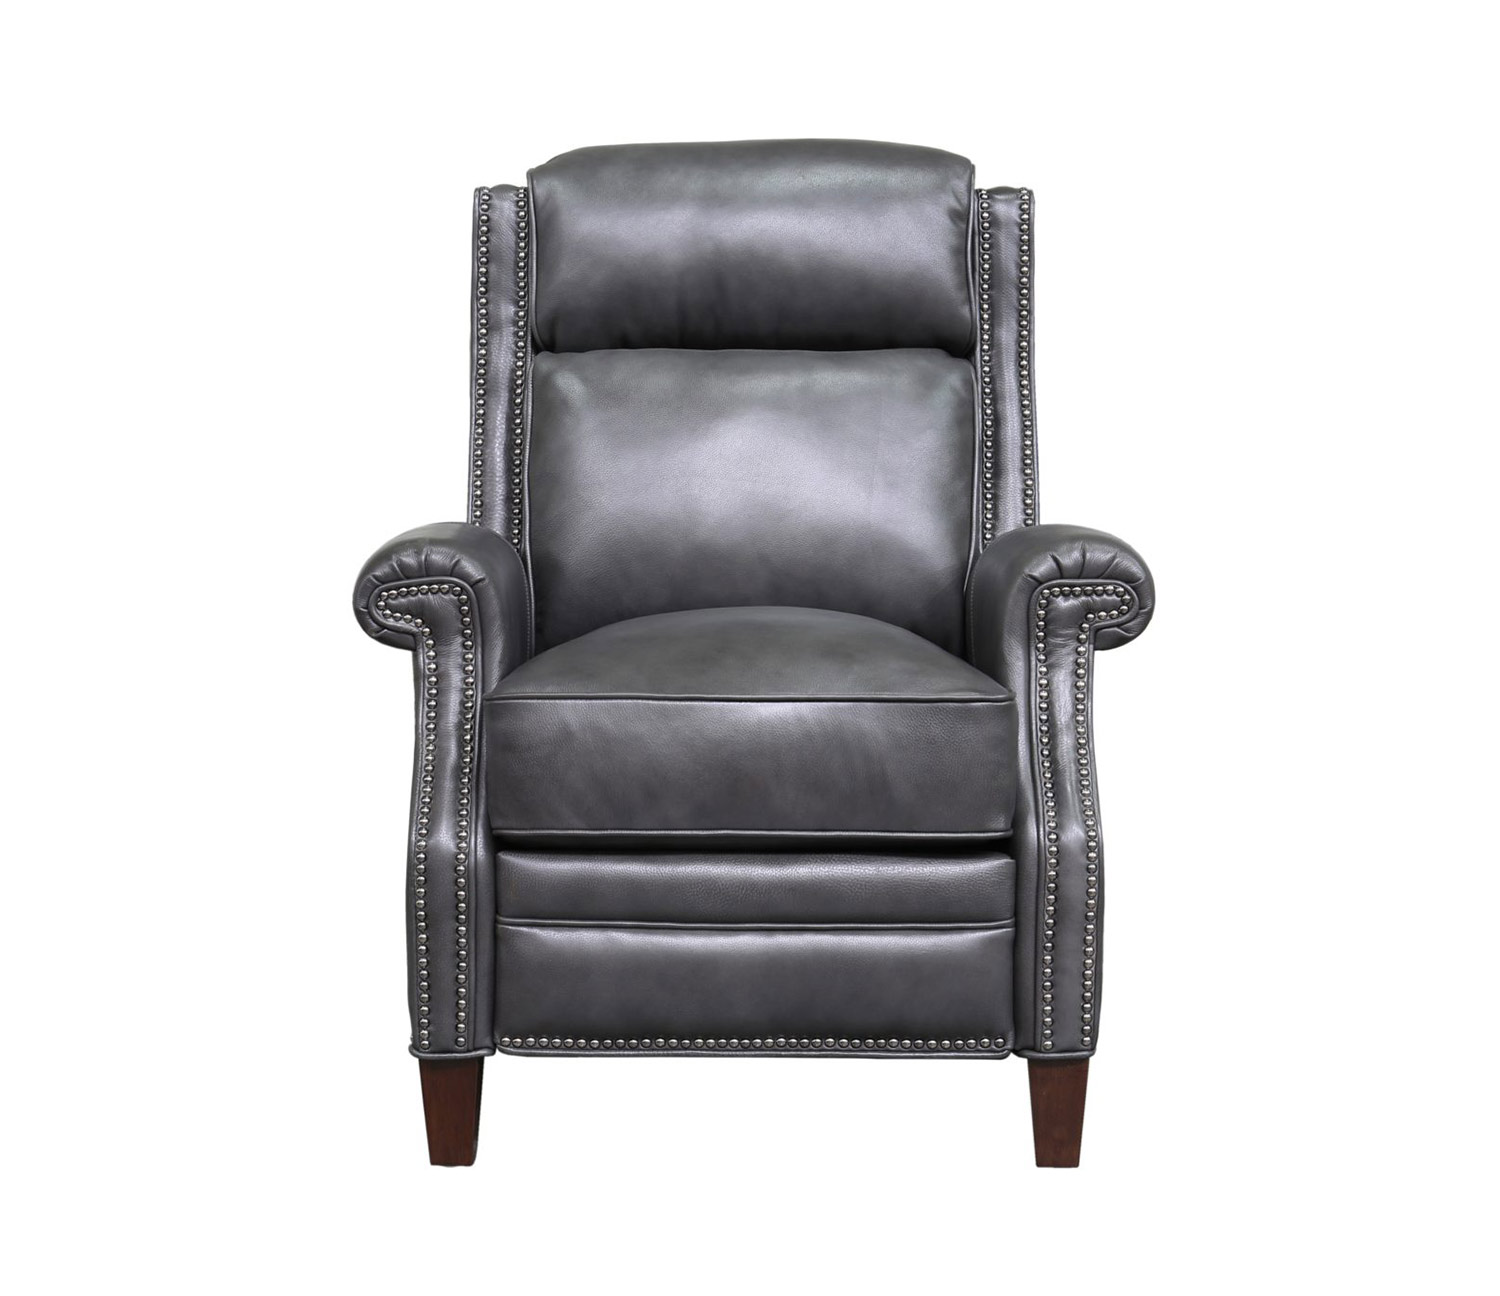 Barcalounger Barrett Power Recliner Chair with Power Head Rest - Wrenn Gray/all leather